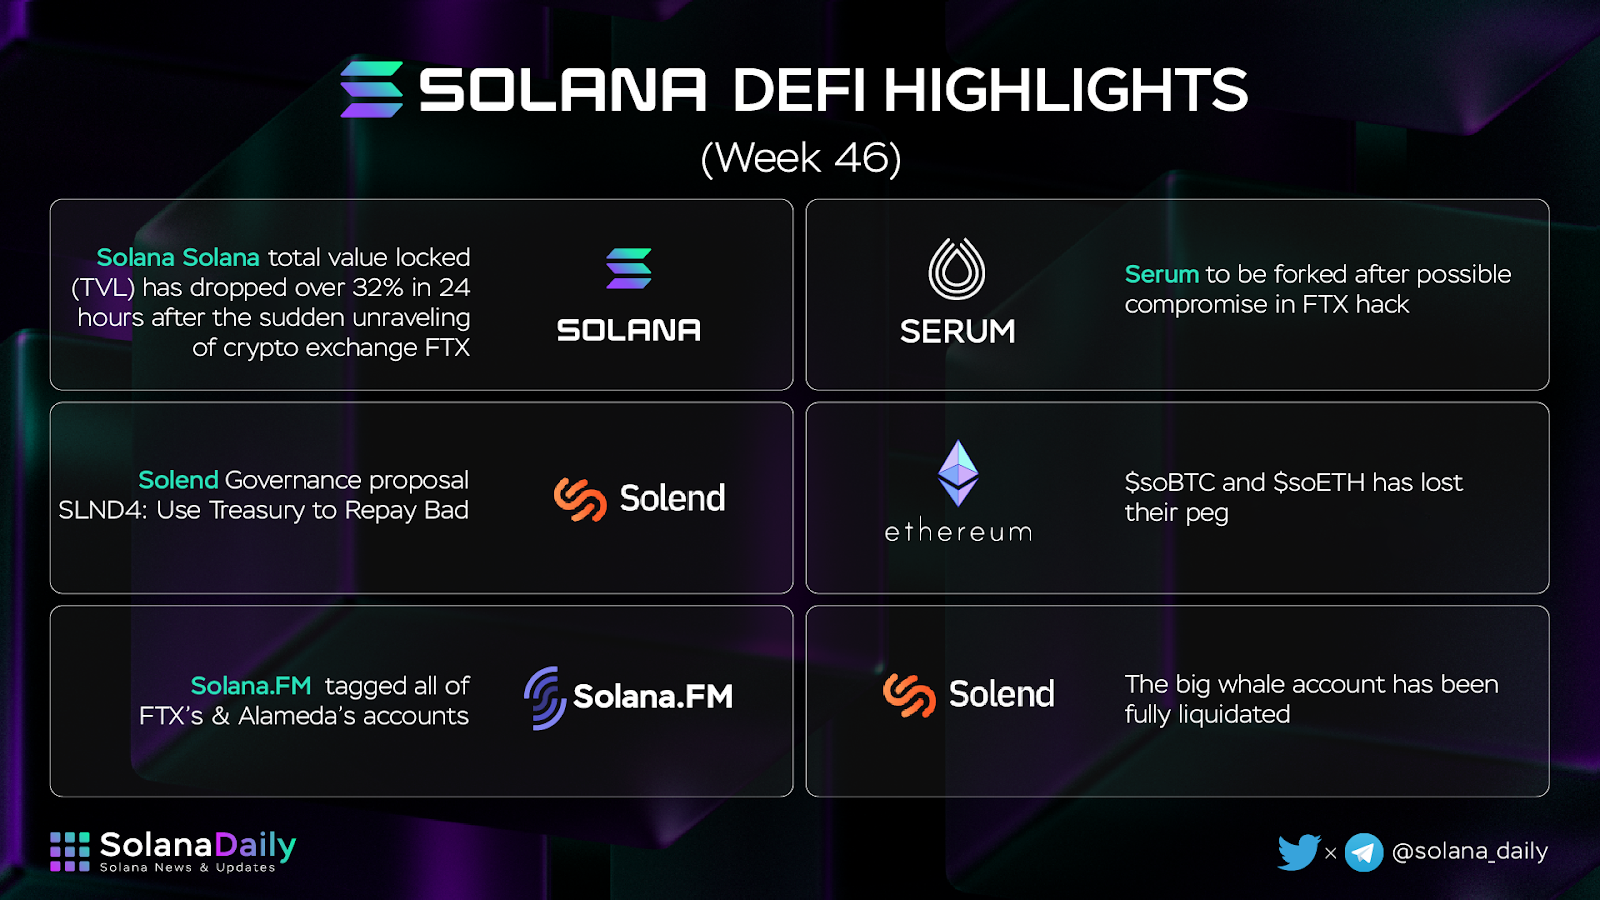 Solana Weekly Recap Week 46 (10/11 - 16/11) - 3